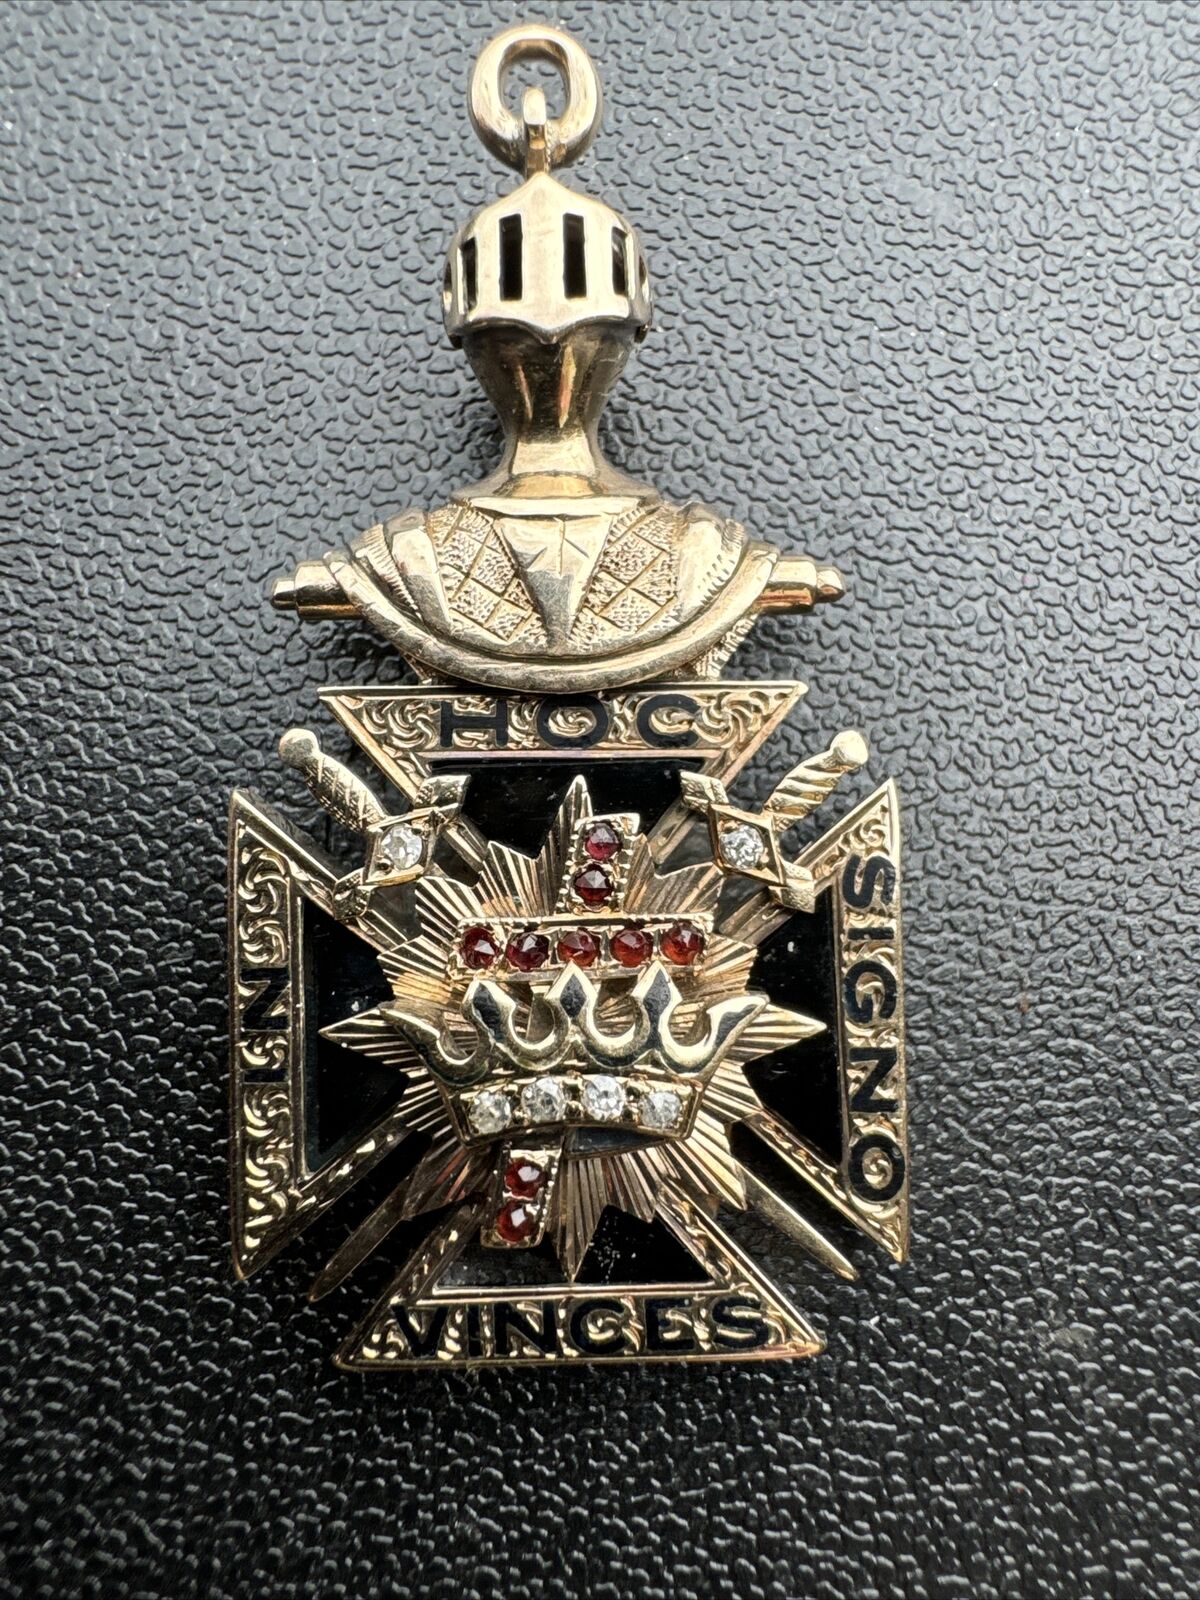 14k Gold Masonic Knights Templar Diamond Fob Pendant In Hoc Signo Vinces